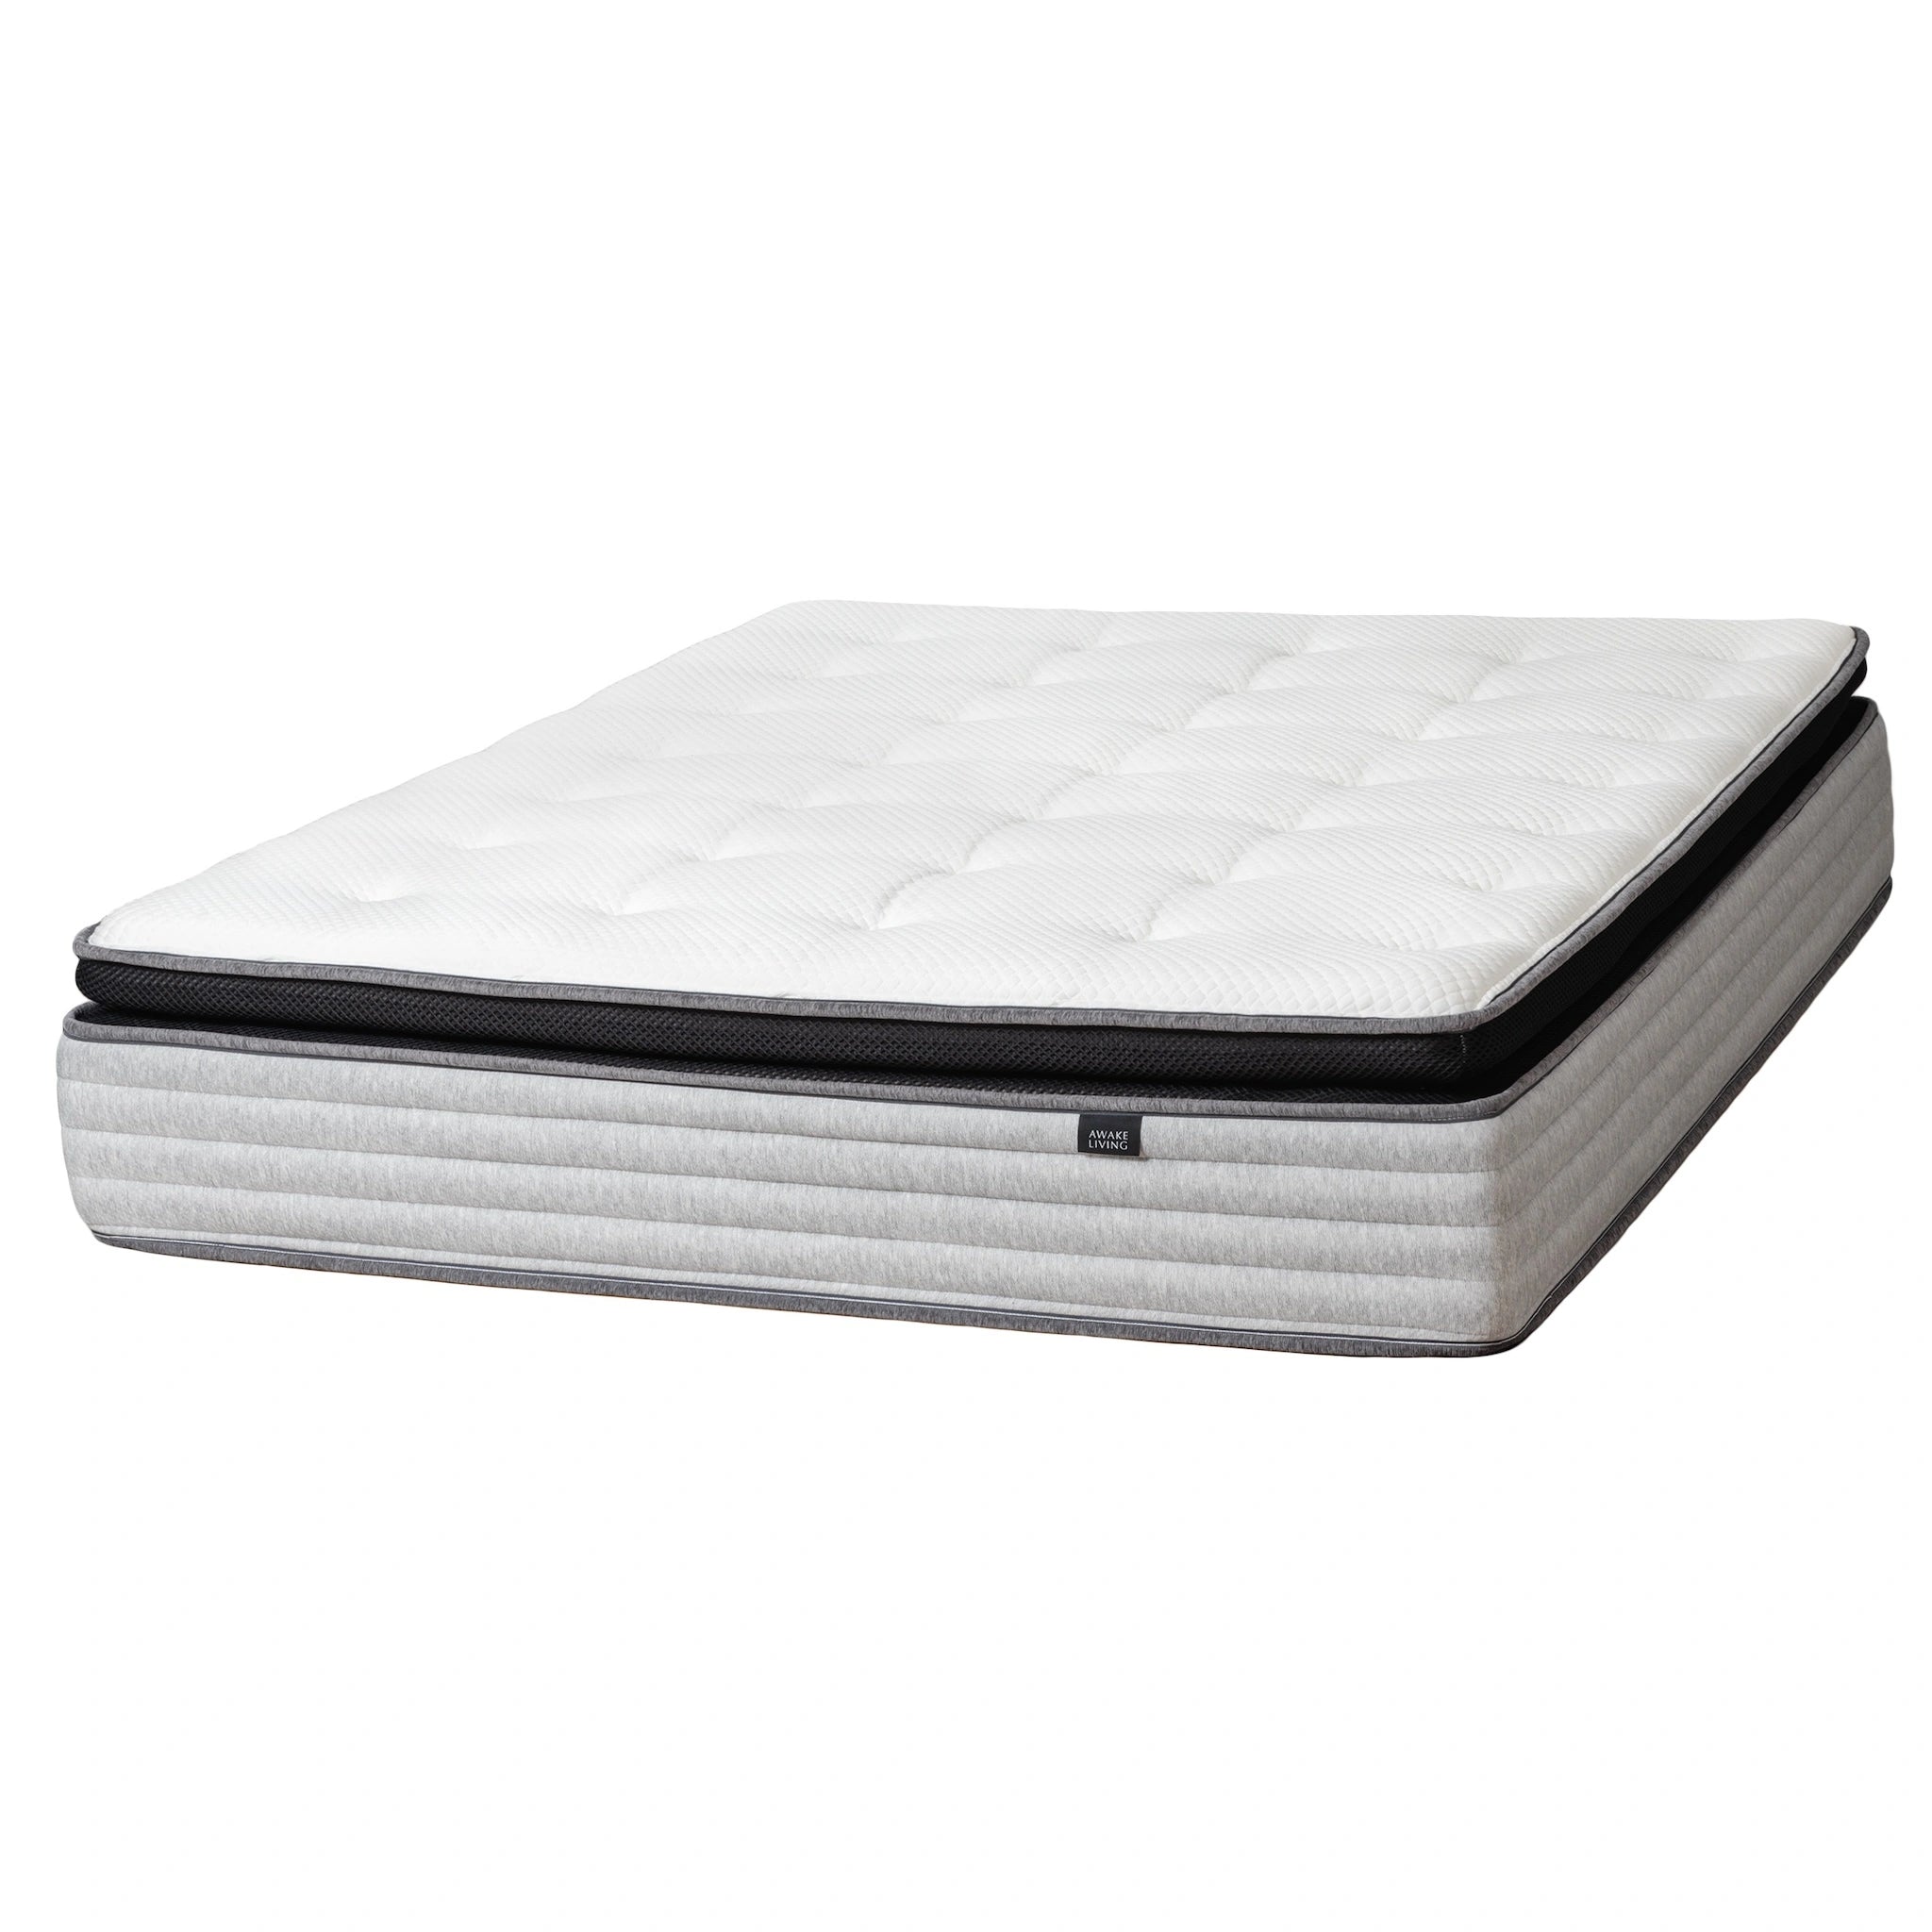 Premium 2.3 零壓深眠英國鋼記憶棉獨立筒床墊 - 3